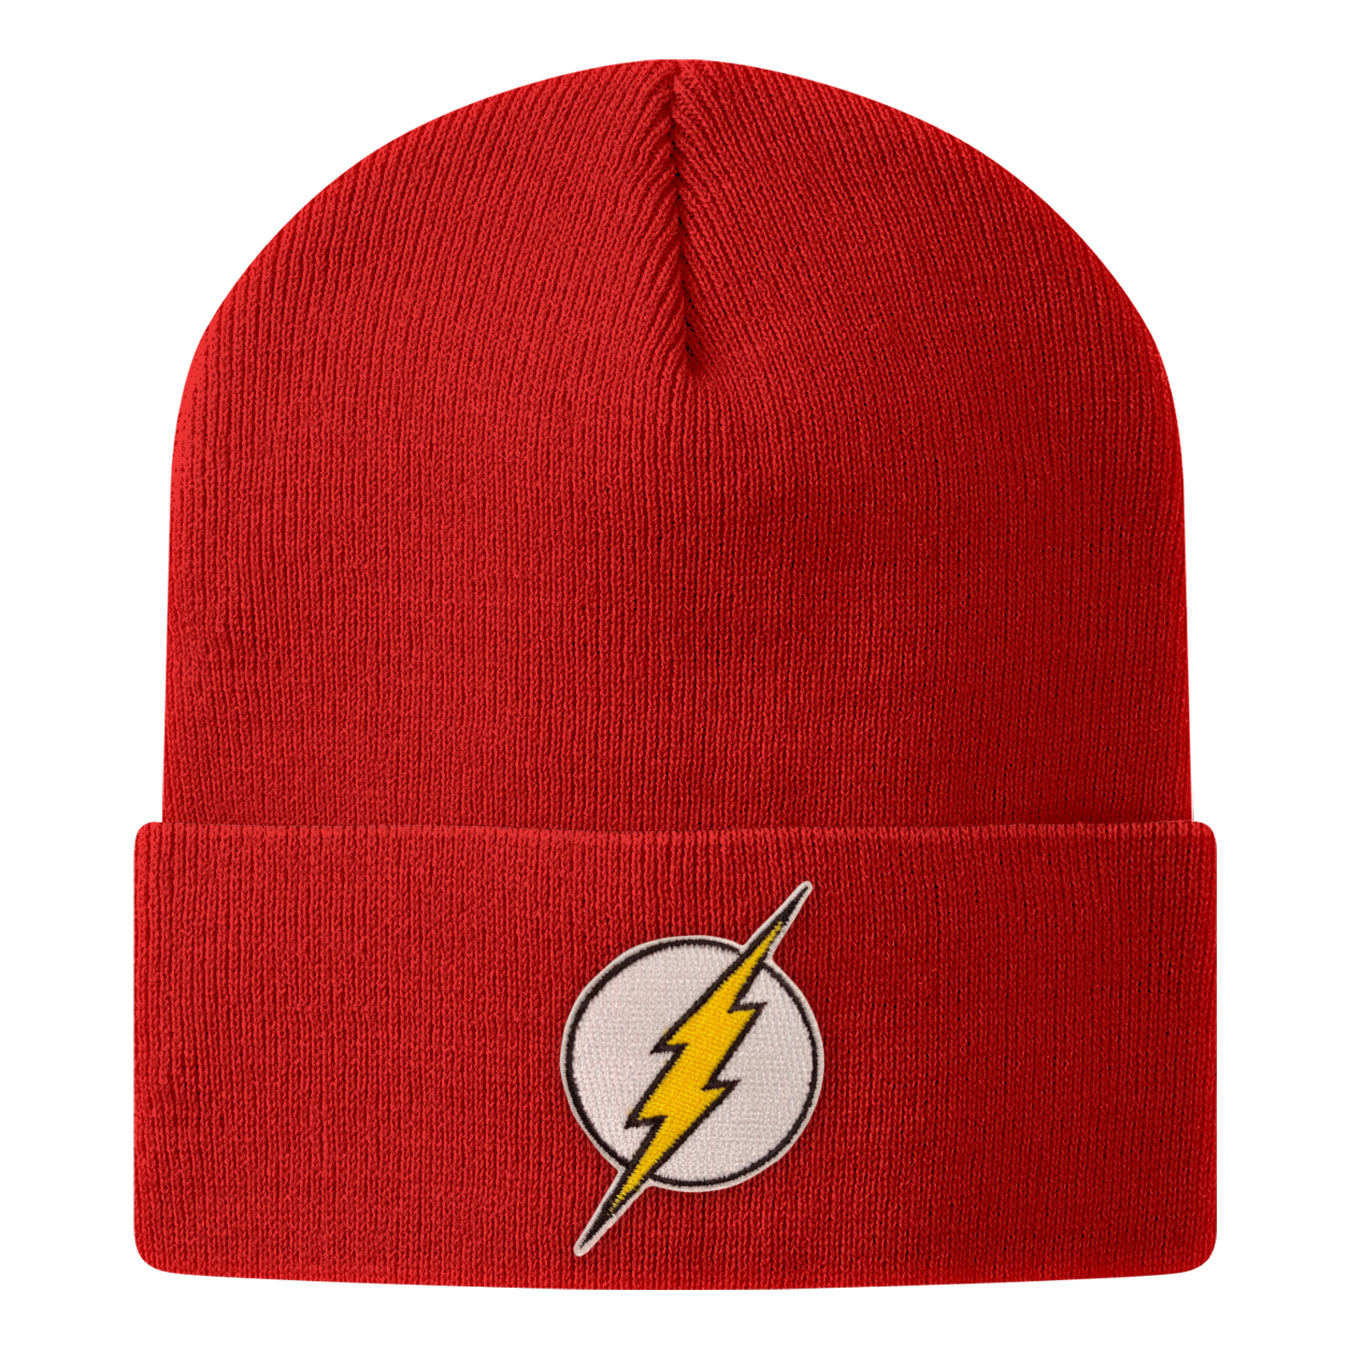 Flash Snapback Shirtstore - The Premium Cap